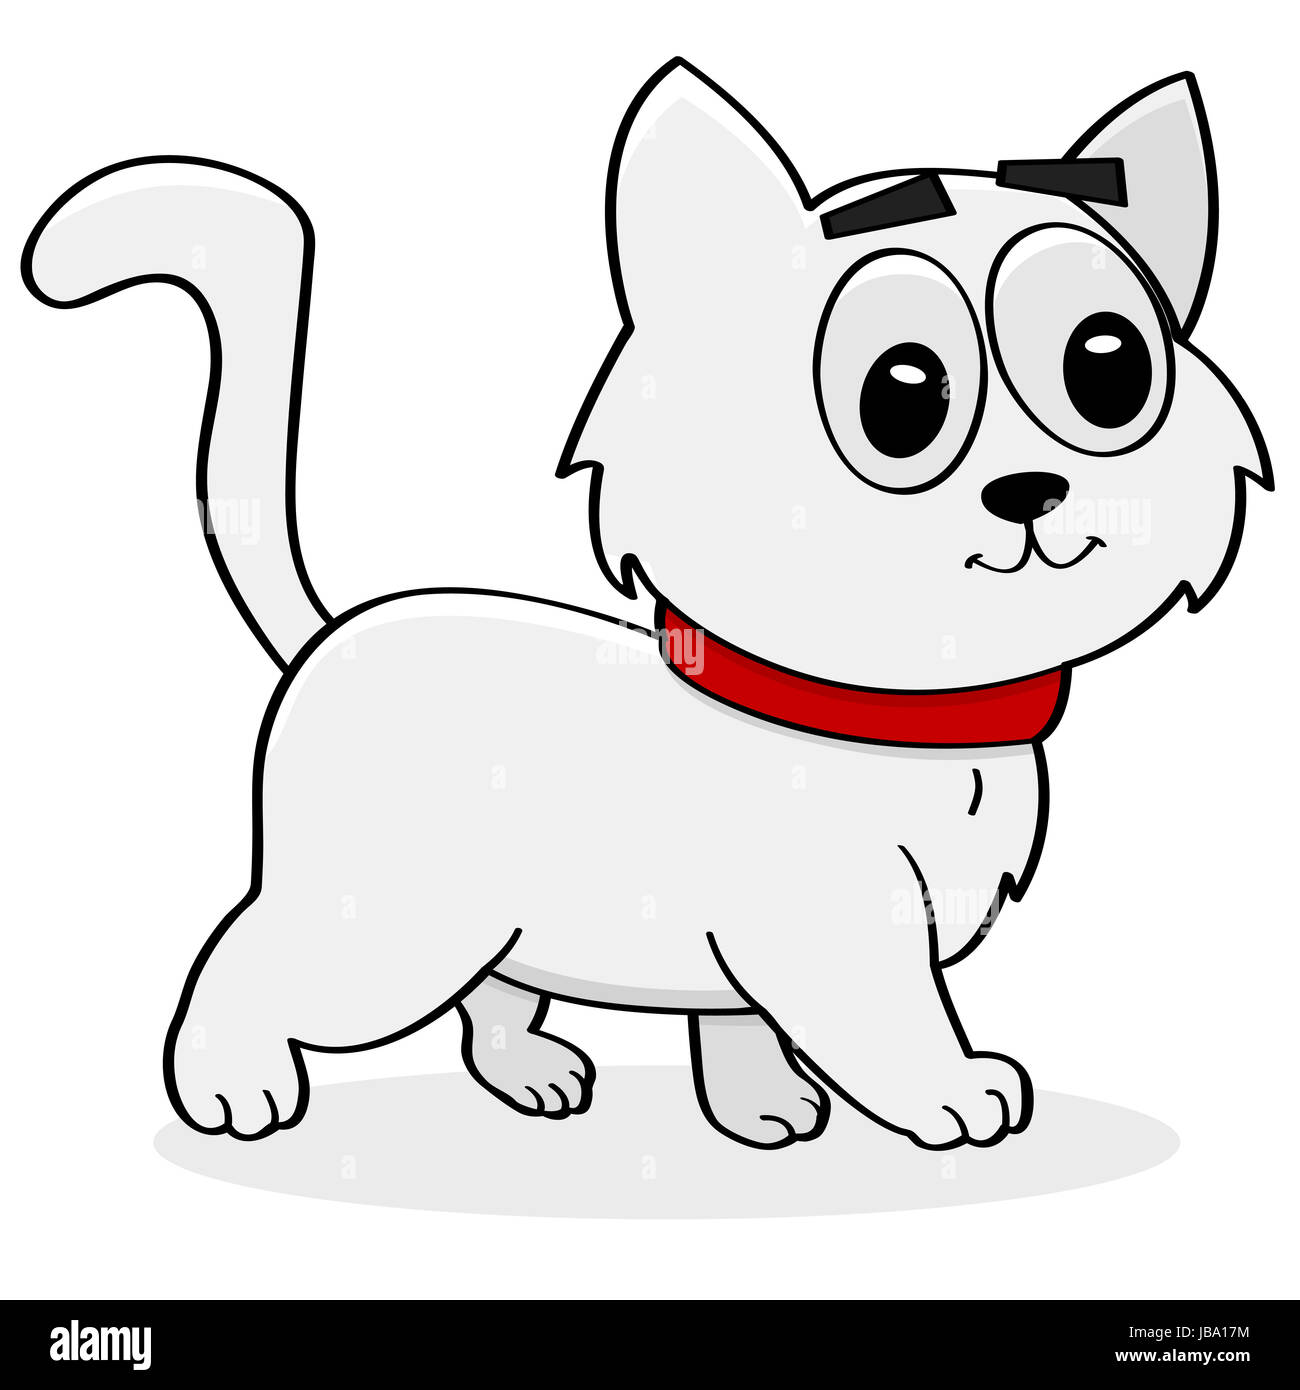 Cartoon illustration showing a happy cat walking around Stock Photo - Alamy